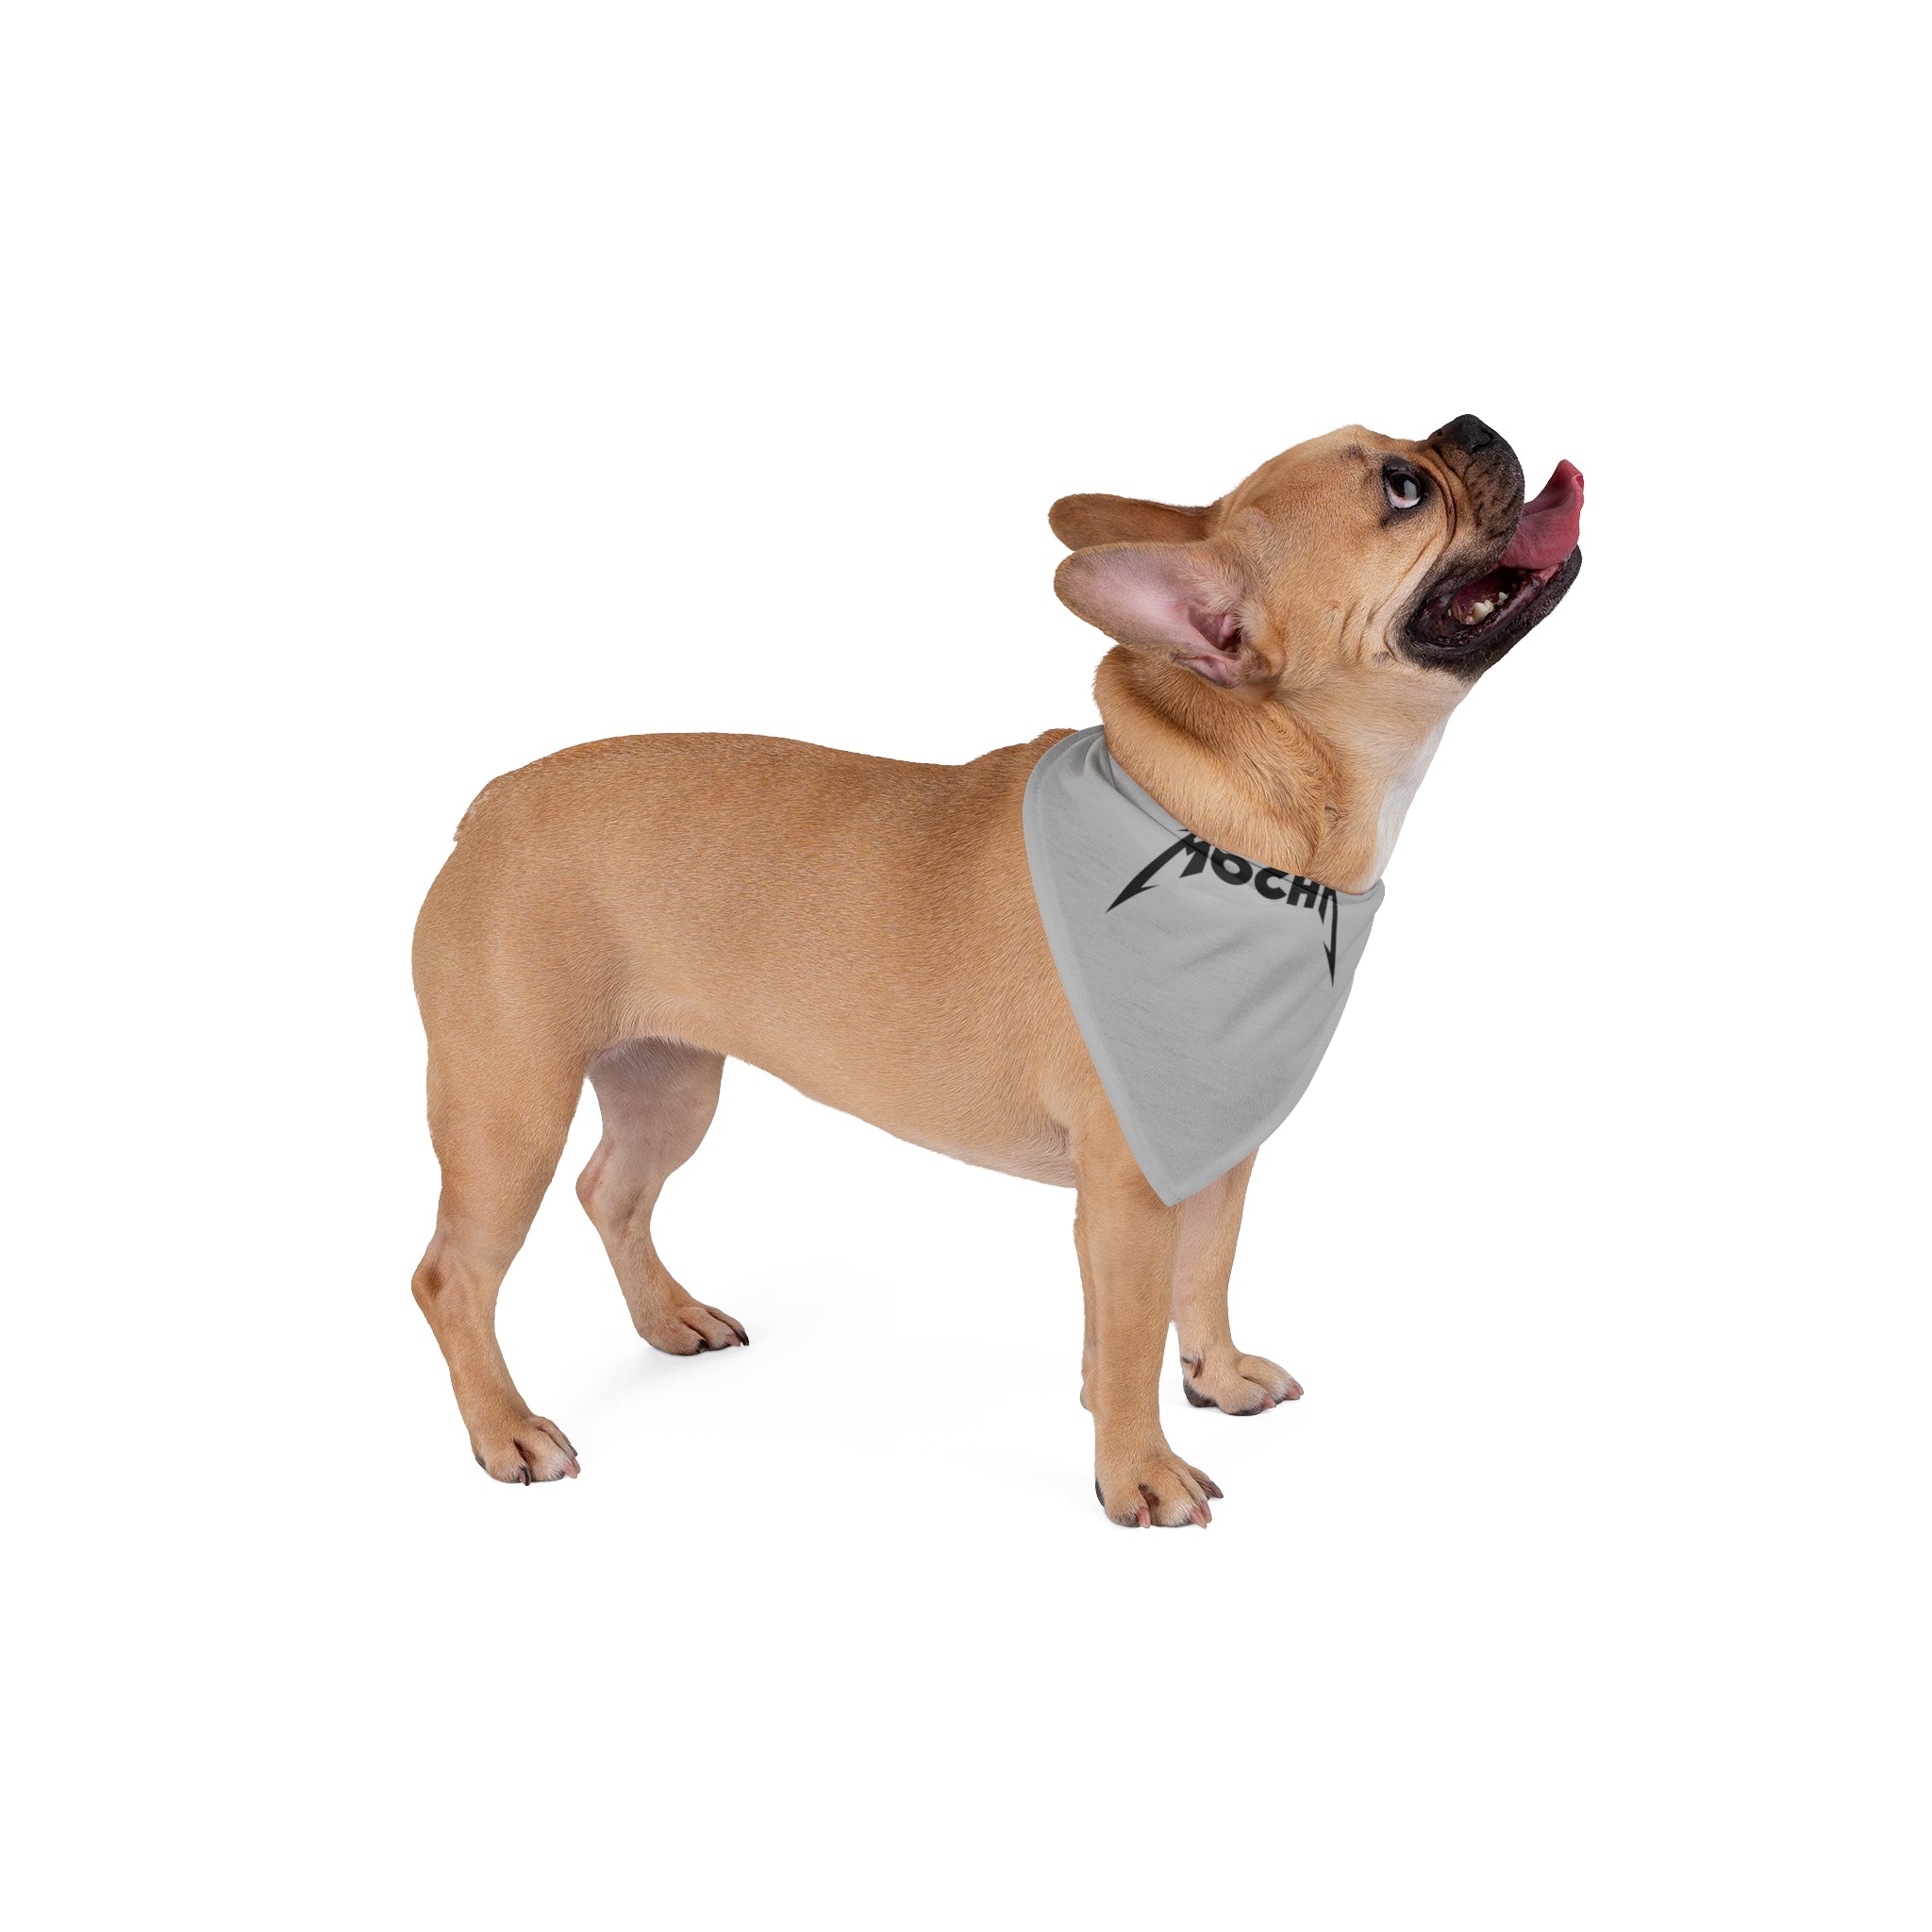 A tan French Bulldog wearing a gray, soft-spun polyester bandana from the Mocha - Pet Bandana design collection looks upwards with its tongue out.